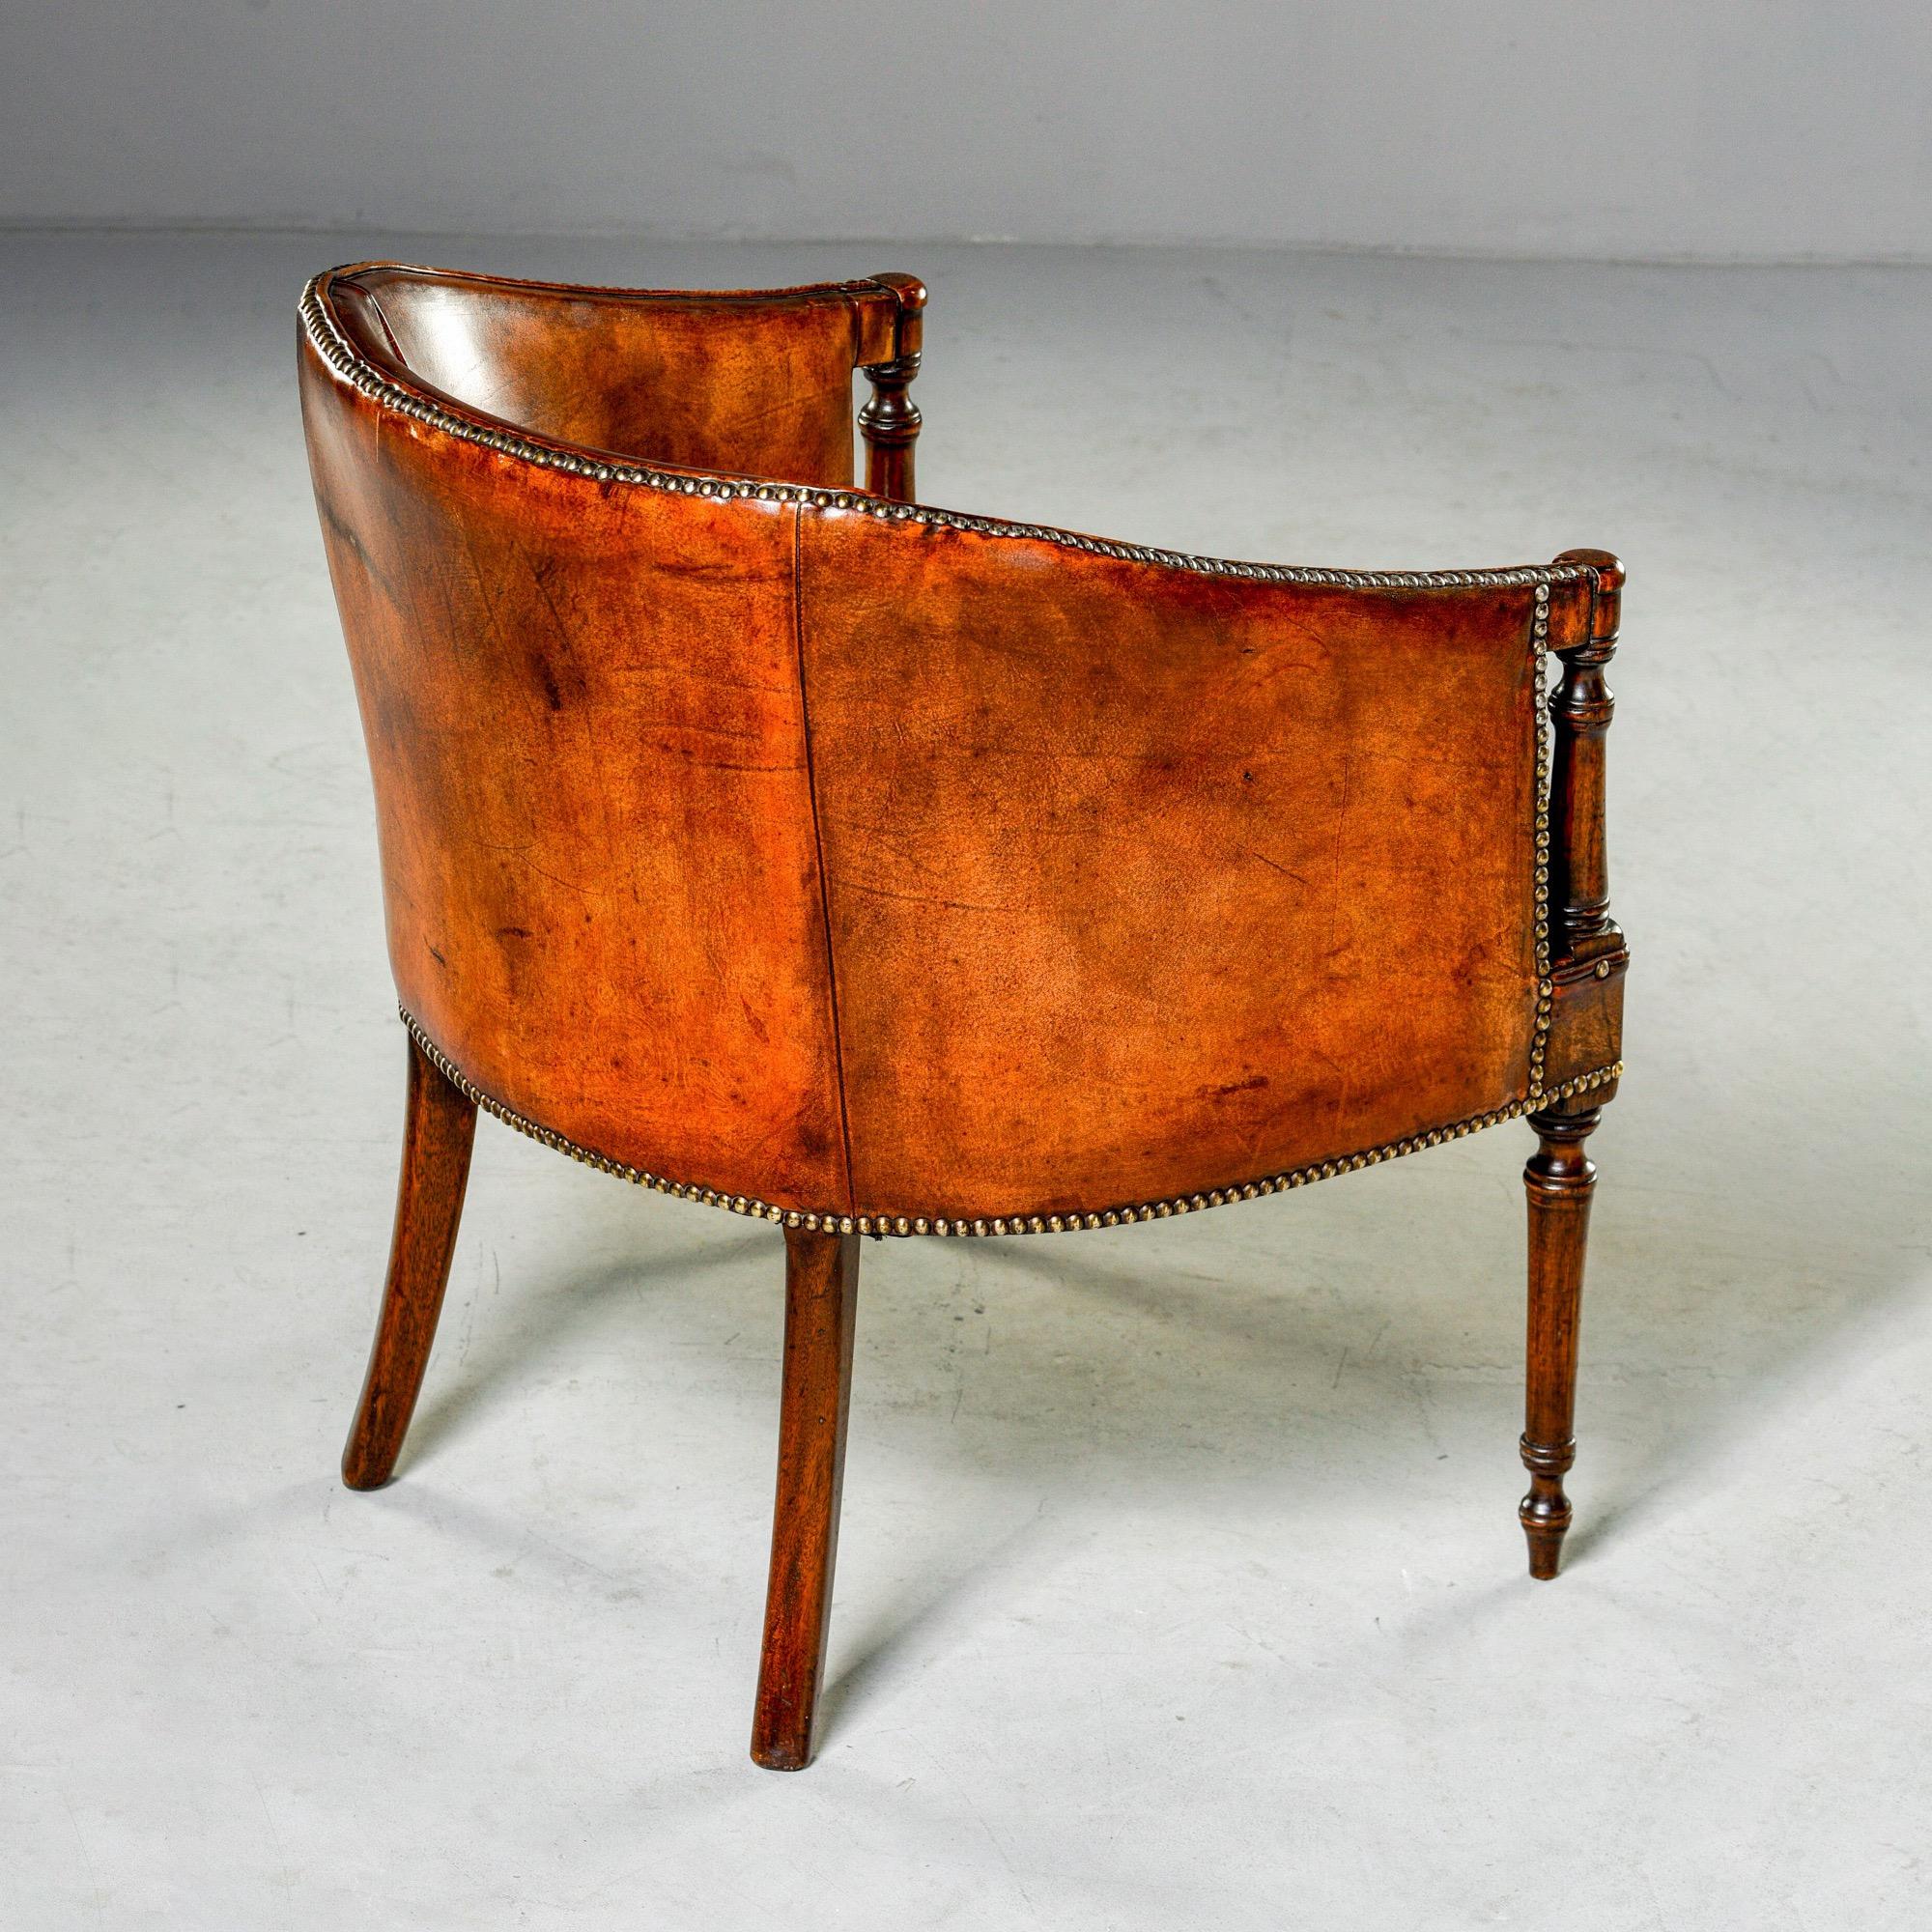 British Colonial English Mahogany Barrel Back Chair in Original Leather